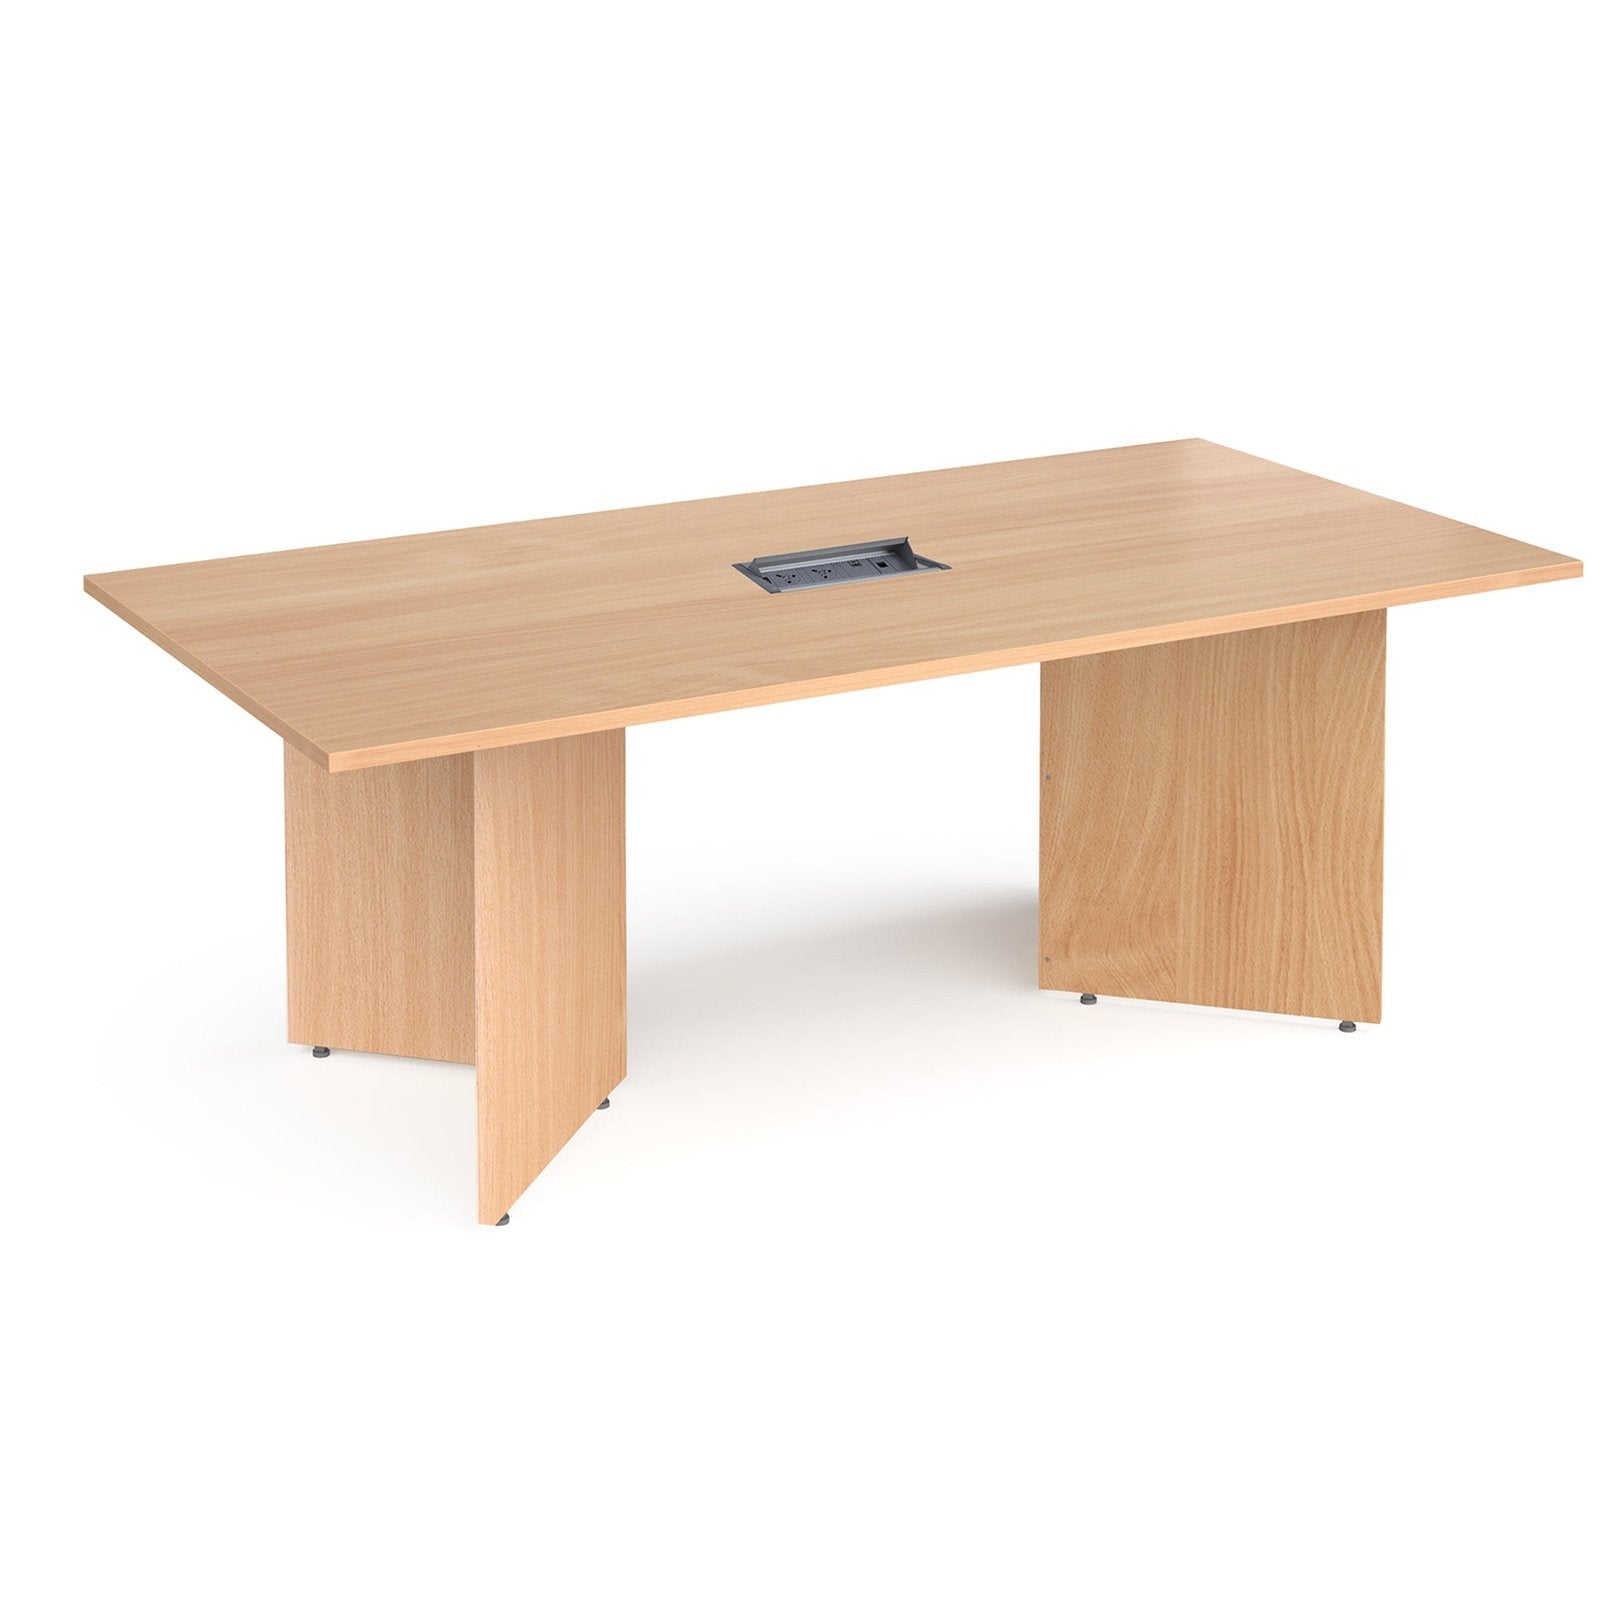 Arrow head leg rectangular boardroom table - Office Products Online